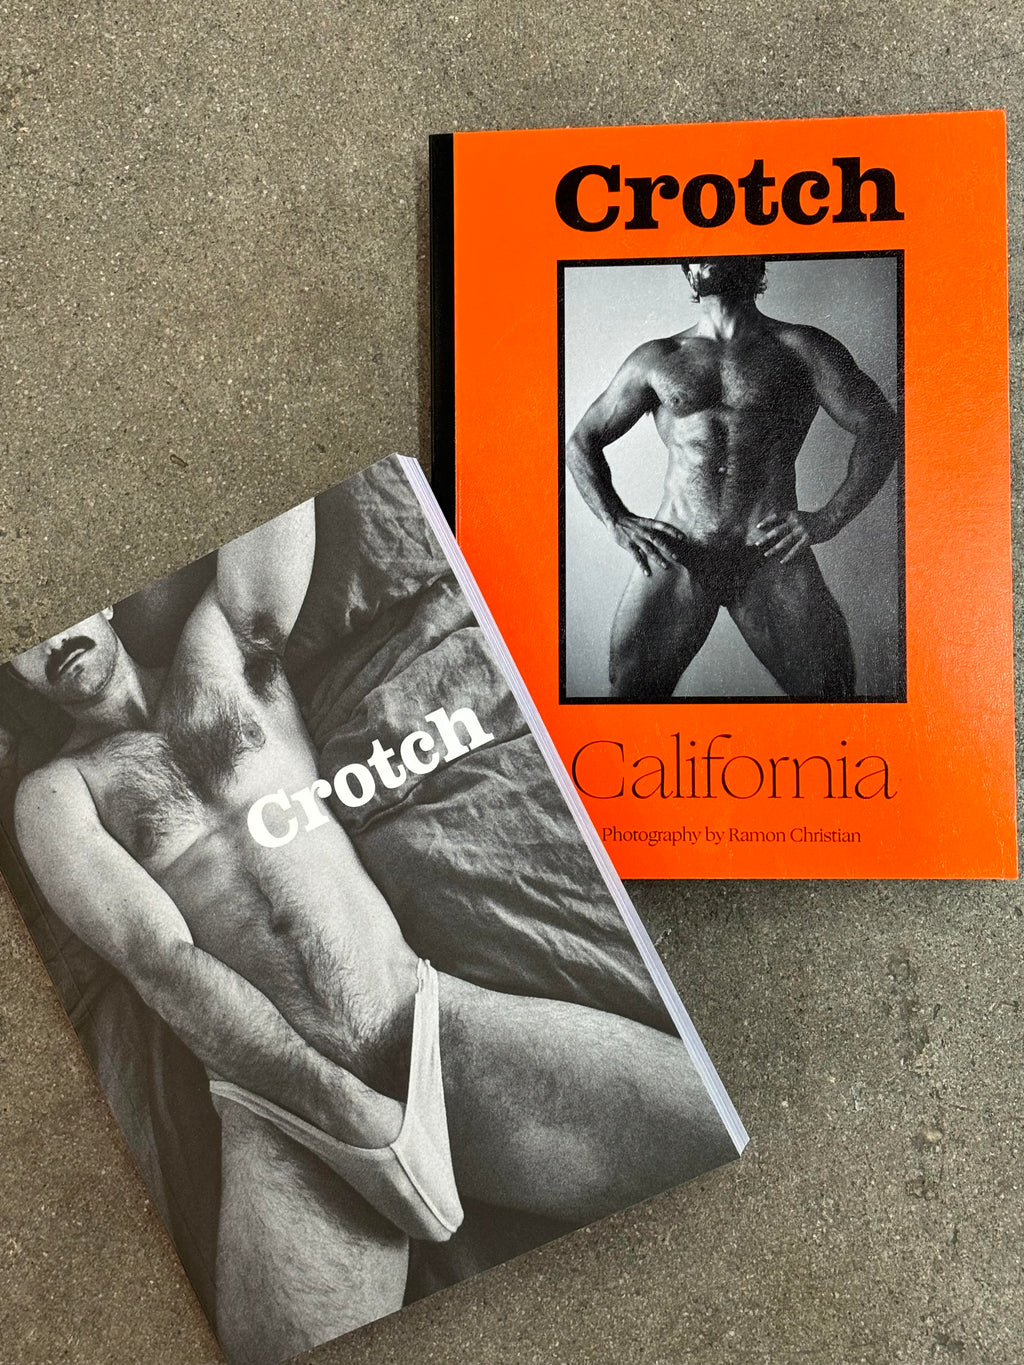 CROTCH Magazine Value Bundle